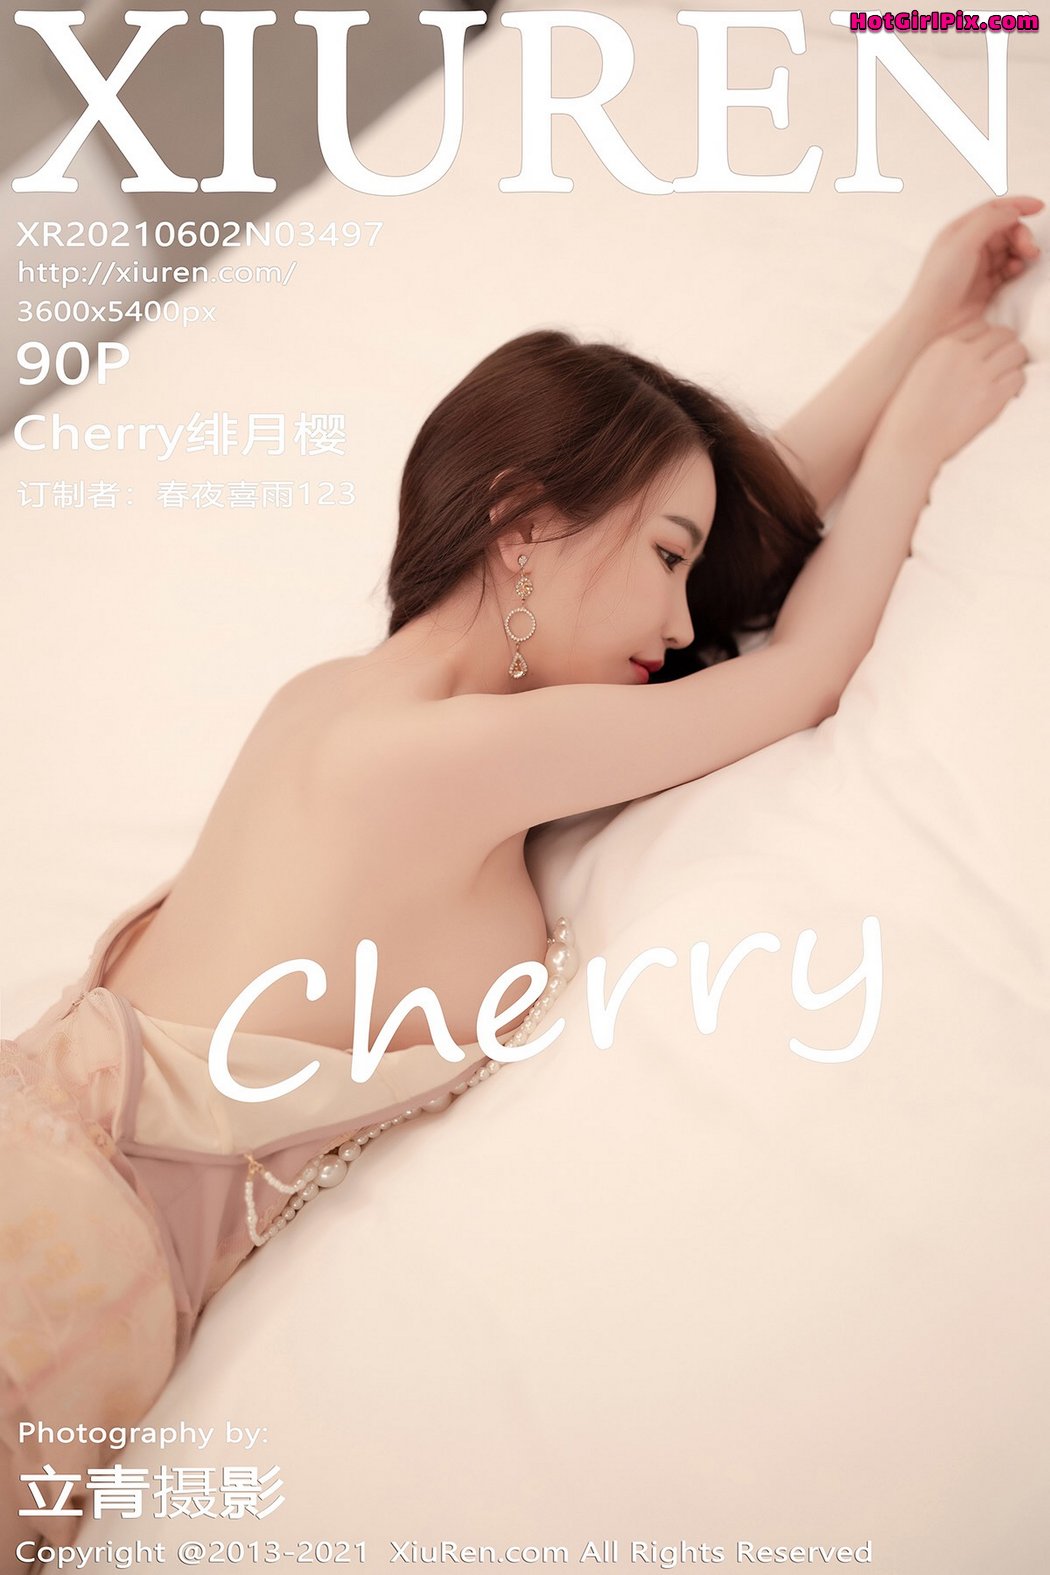 [XIUREN] No.3497 绯月樱-Cherry Cover Photo